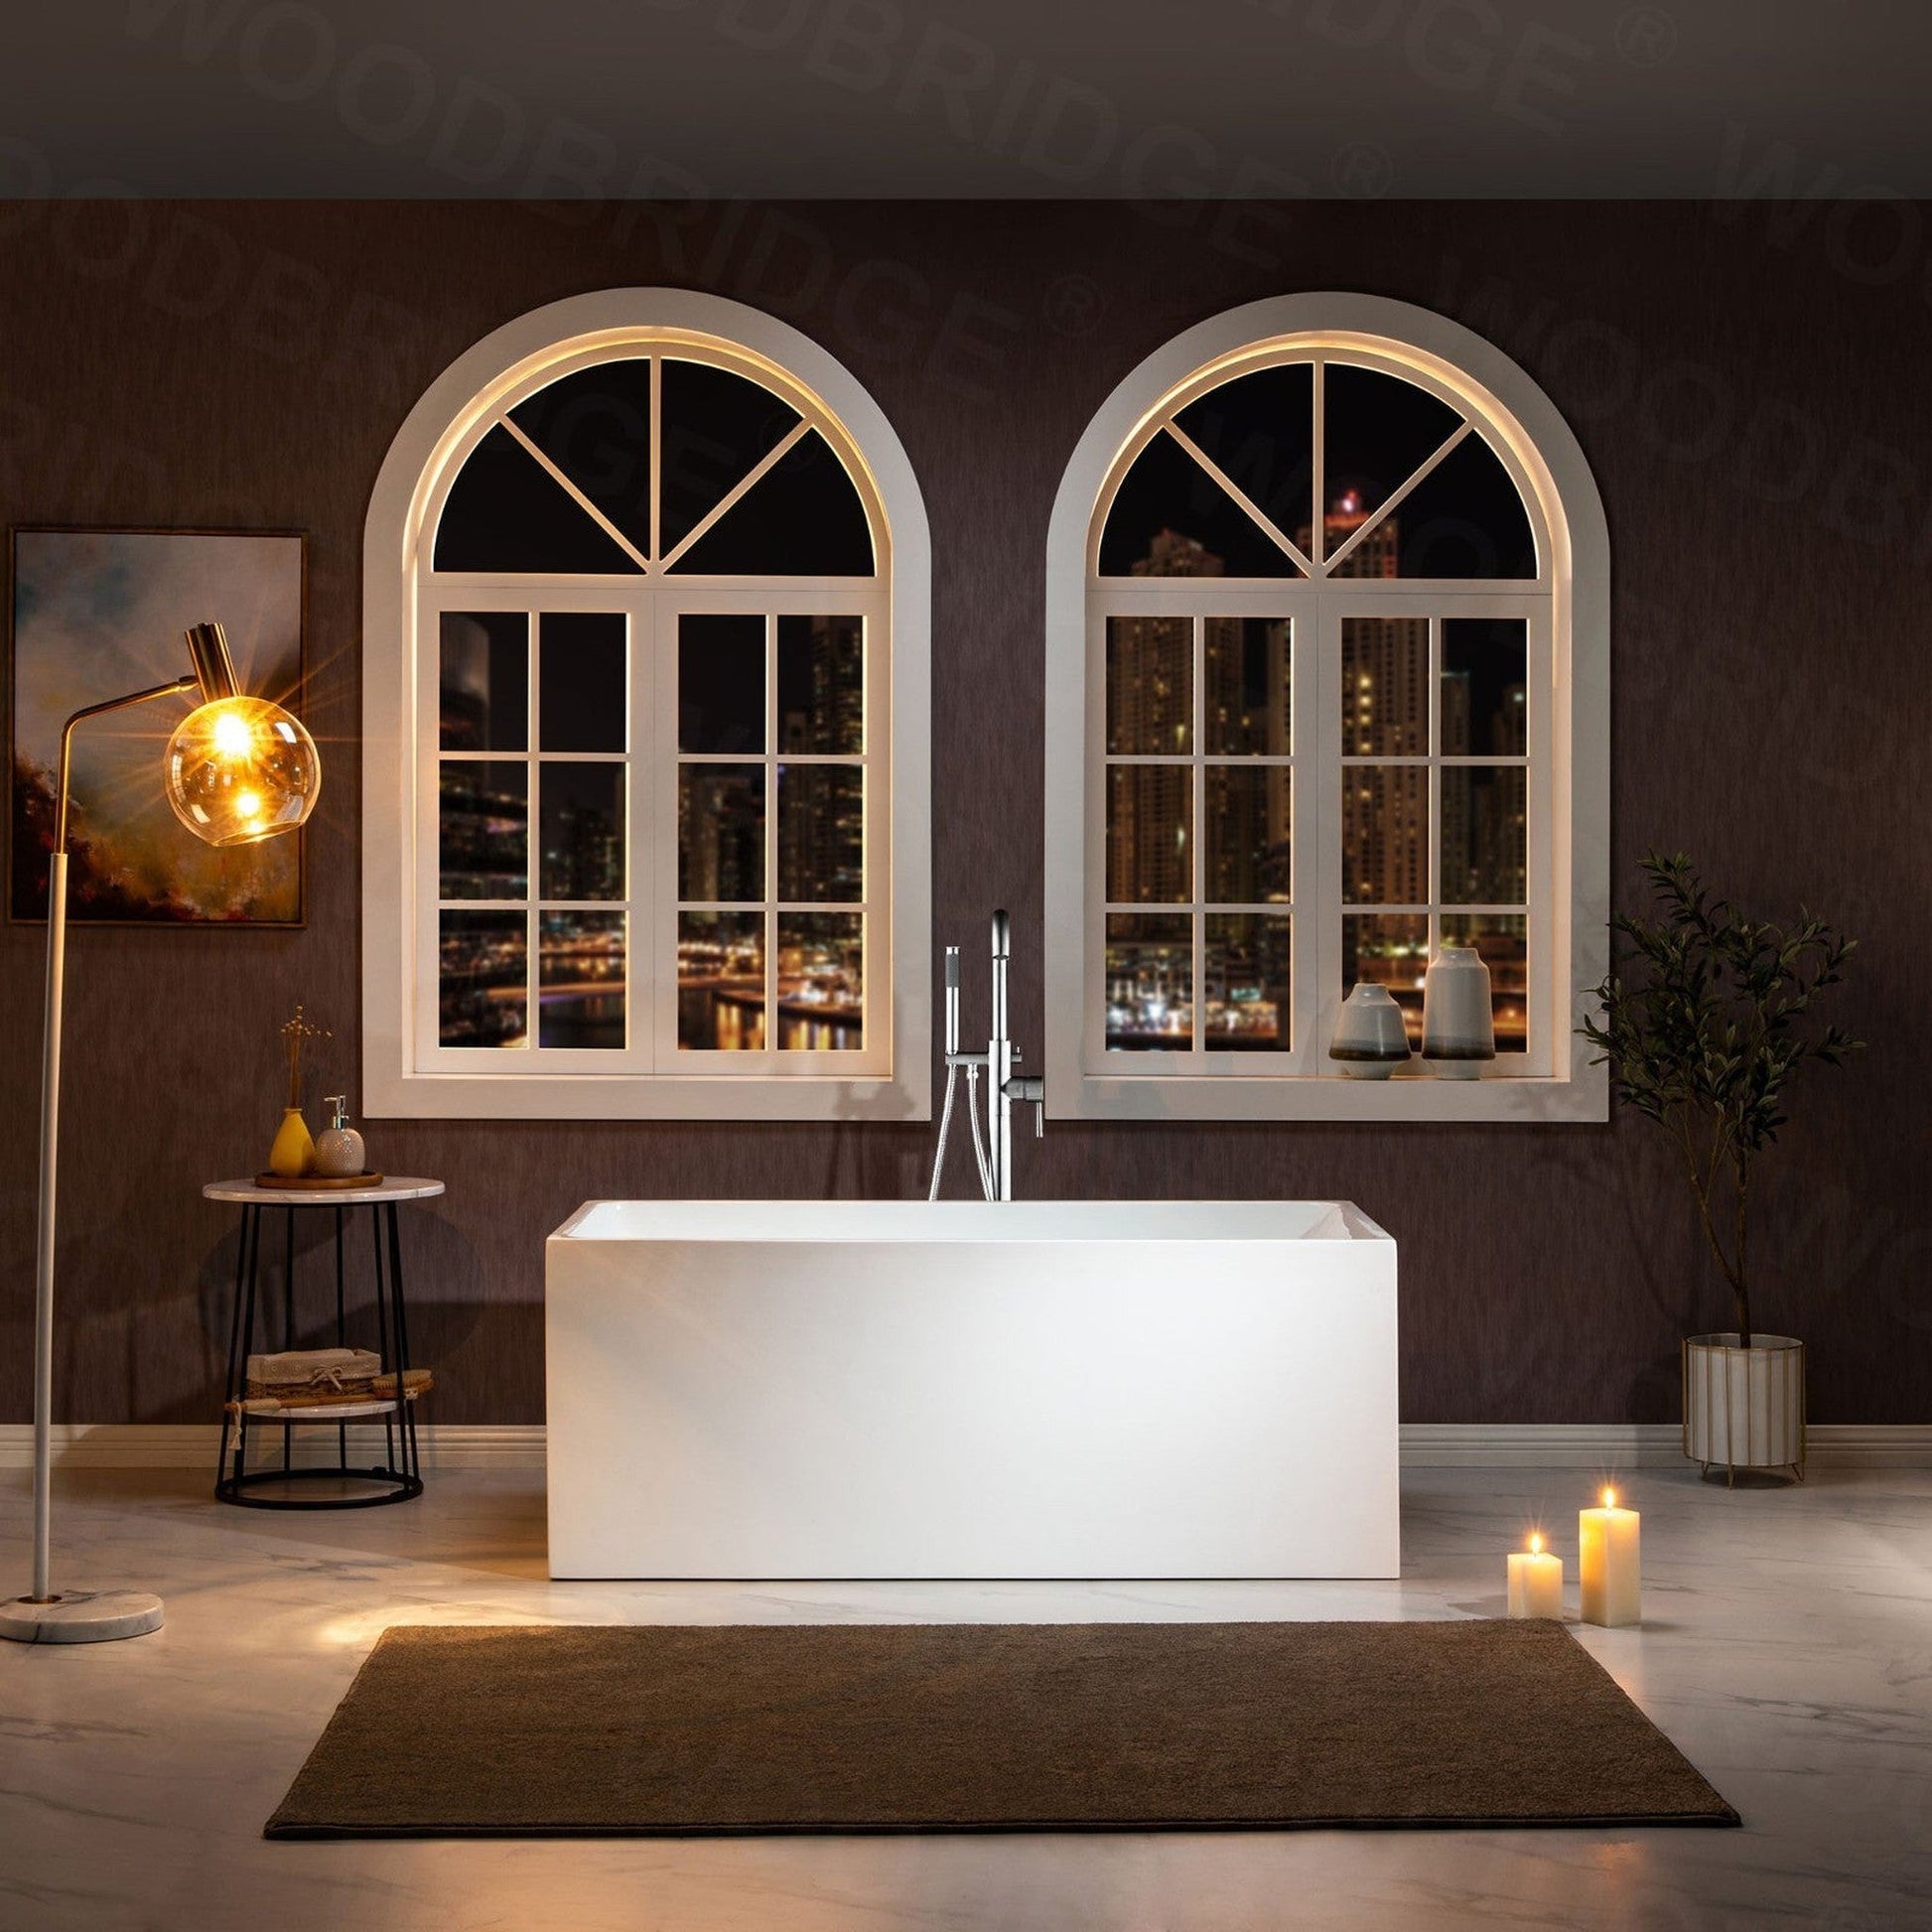 WoodBridge B-0086 67" White Acrylic Freestanding Soaking Bathtub With Chrome Drain, Overflow, F0071CHVT Tub Filler and Caddy Tray